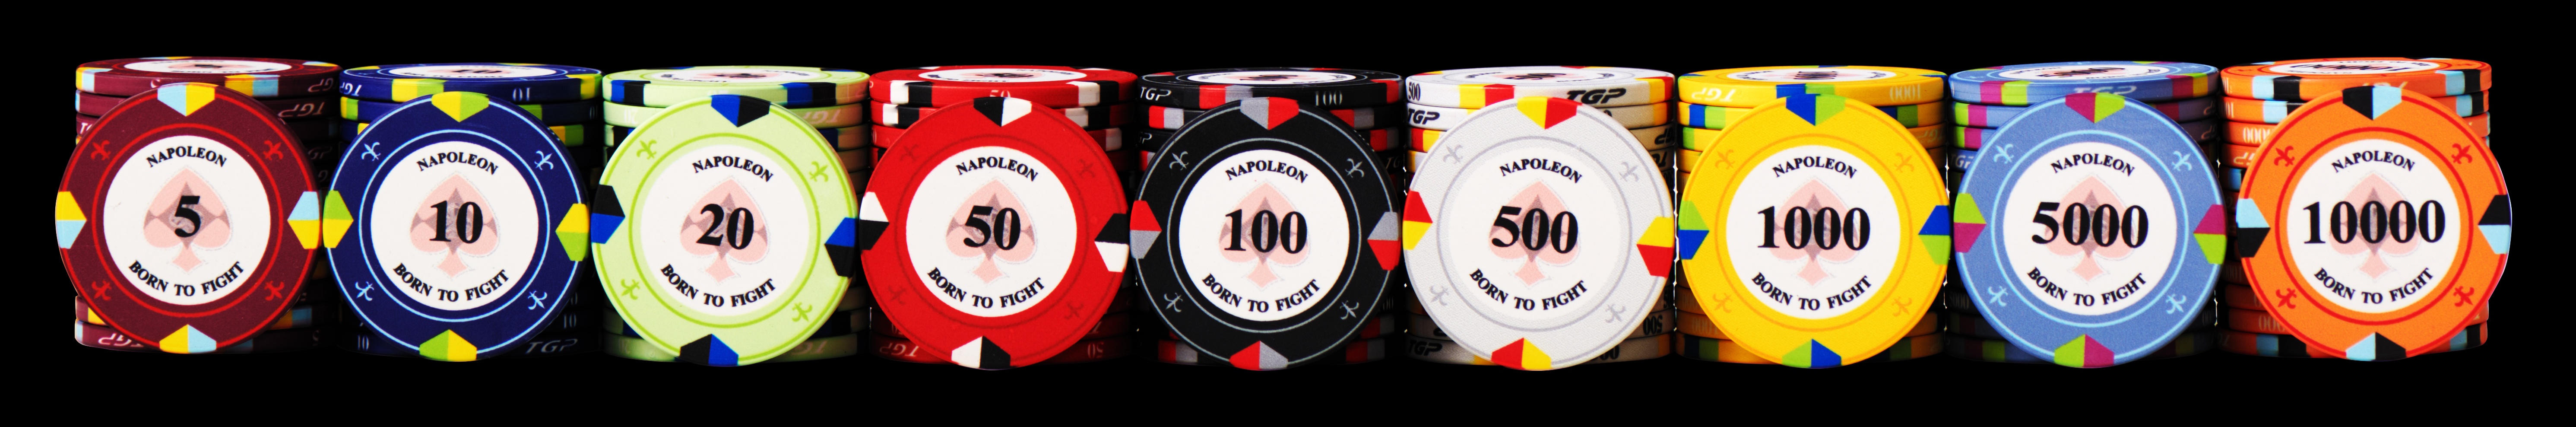 Chip Poker Keramik Napoleon dirancang sederhana dan elegan oleh TGP 